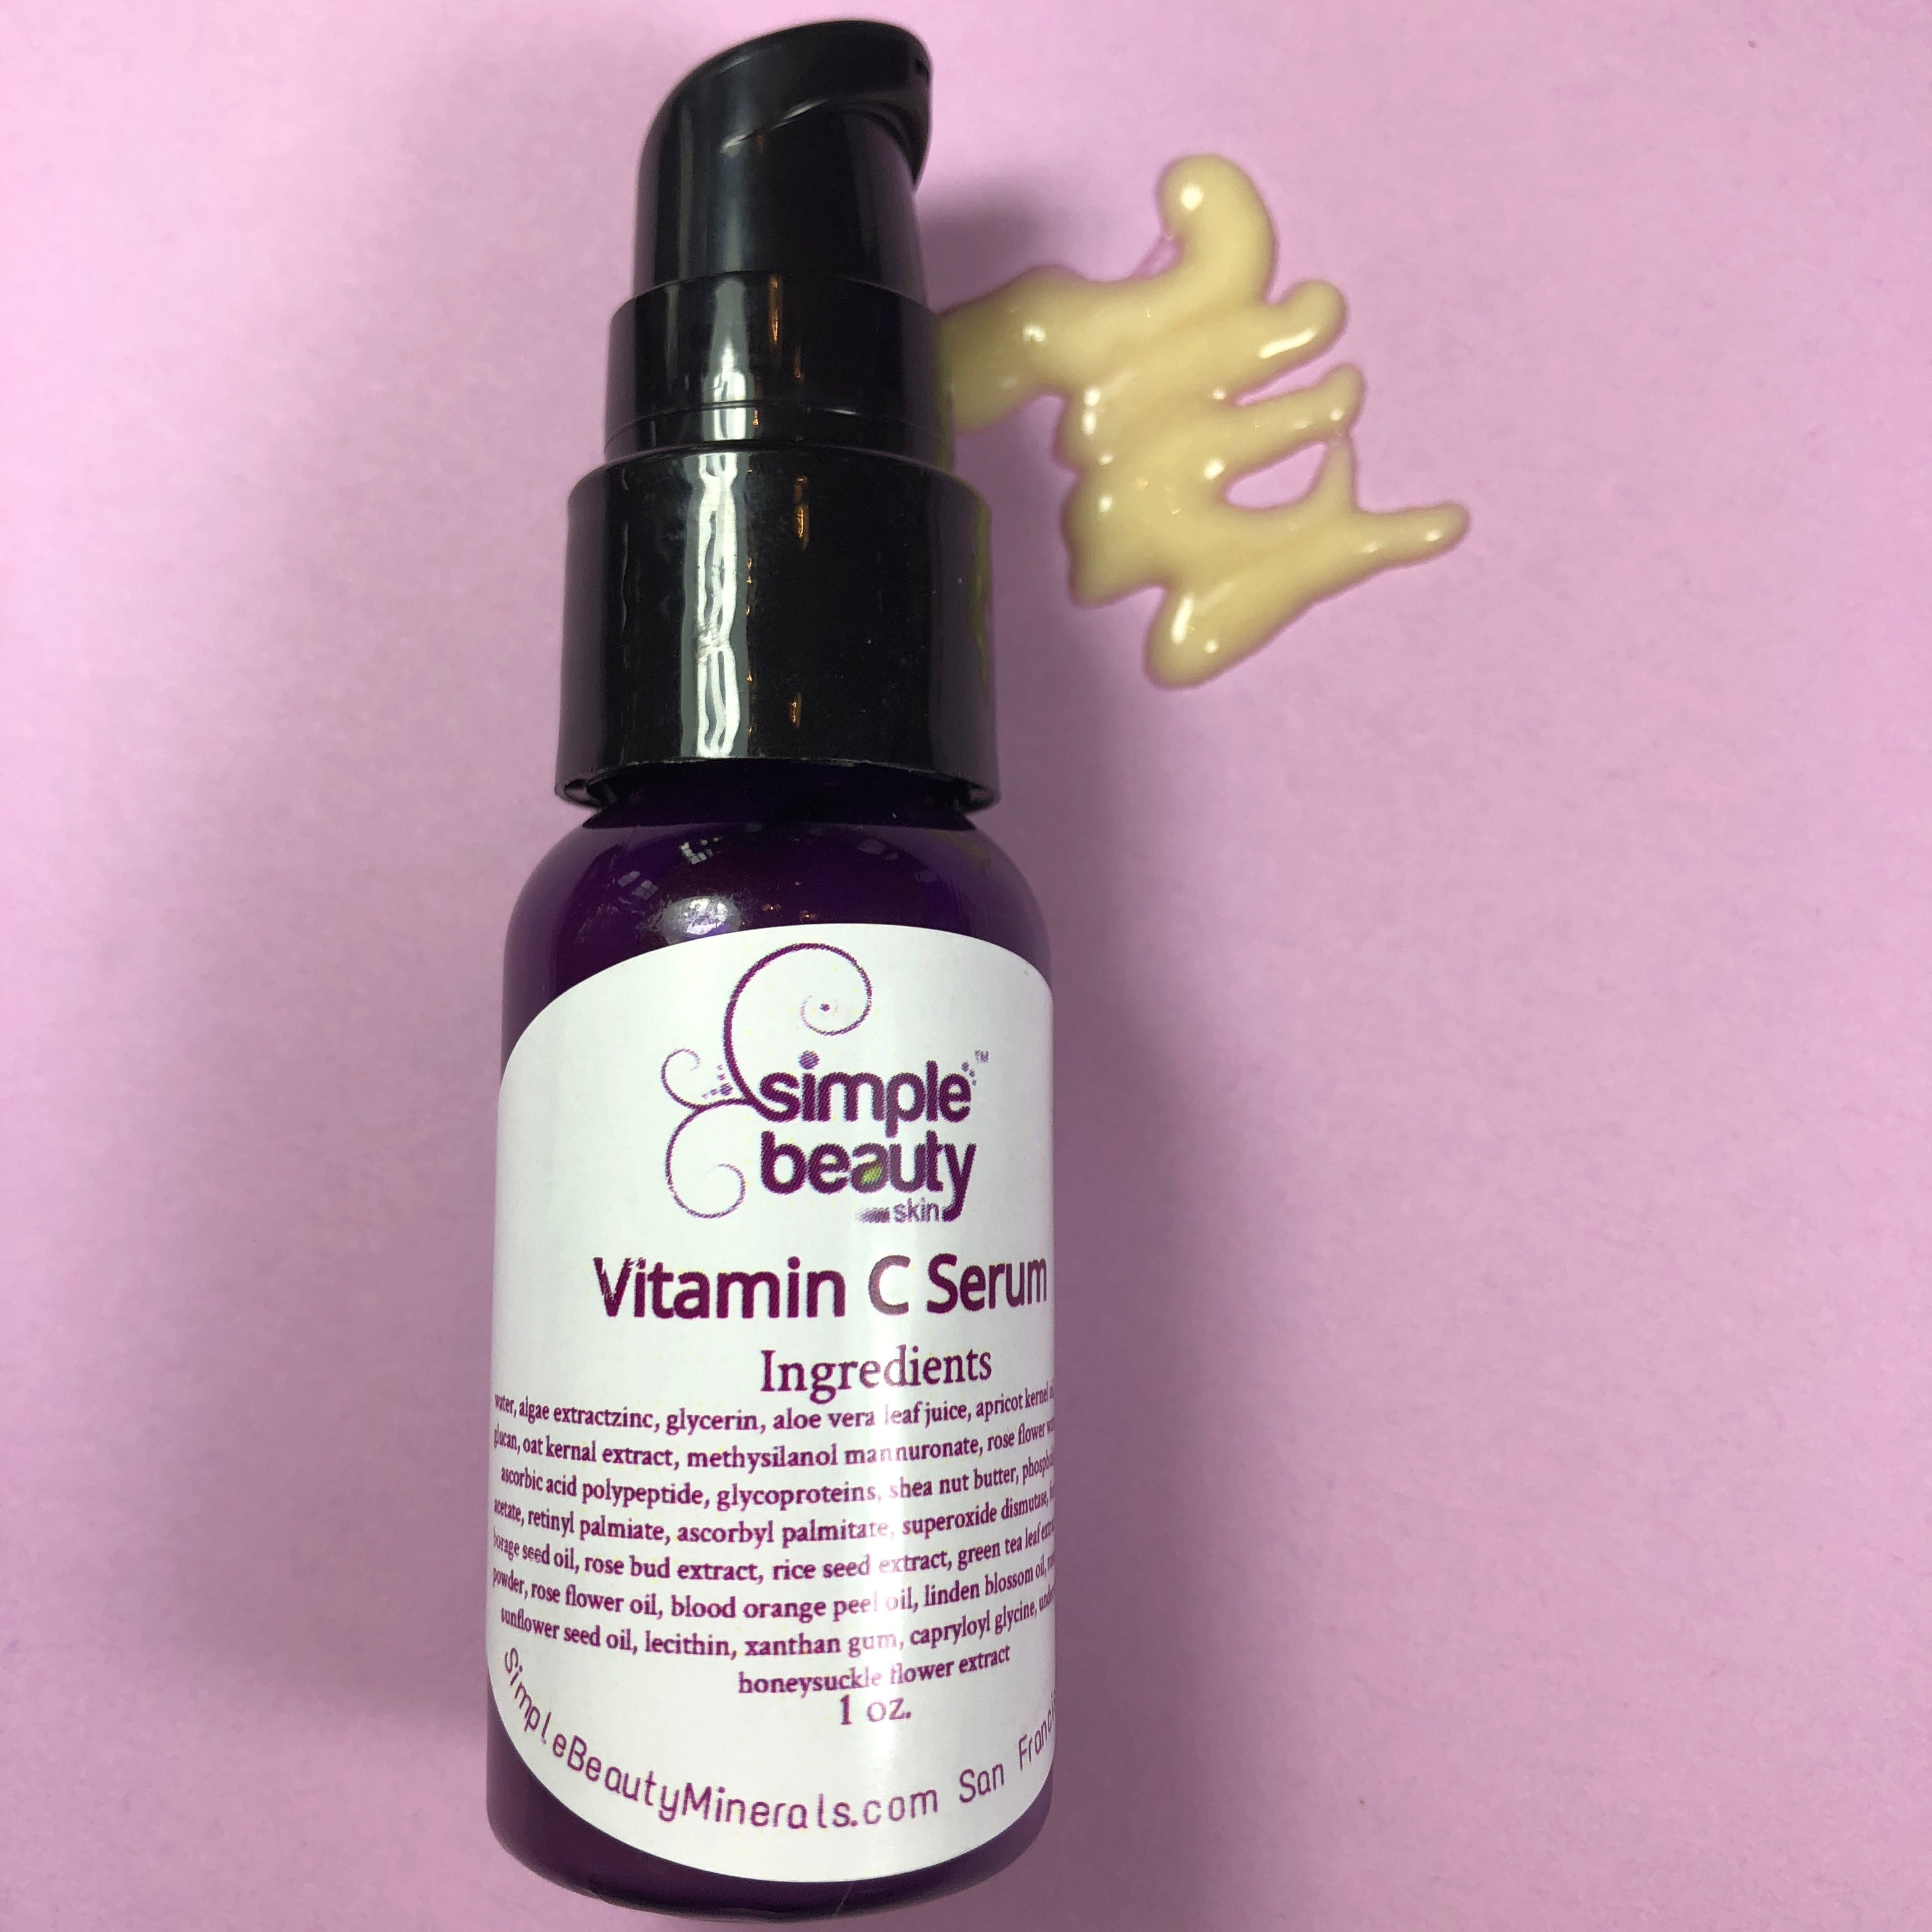 vitamin c serum squirt on purple background